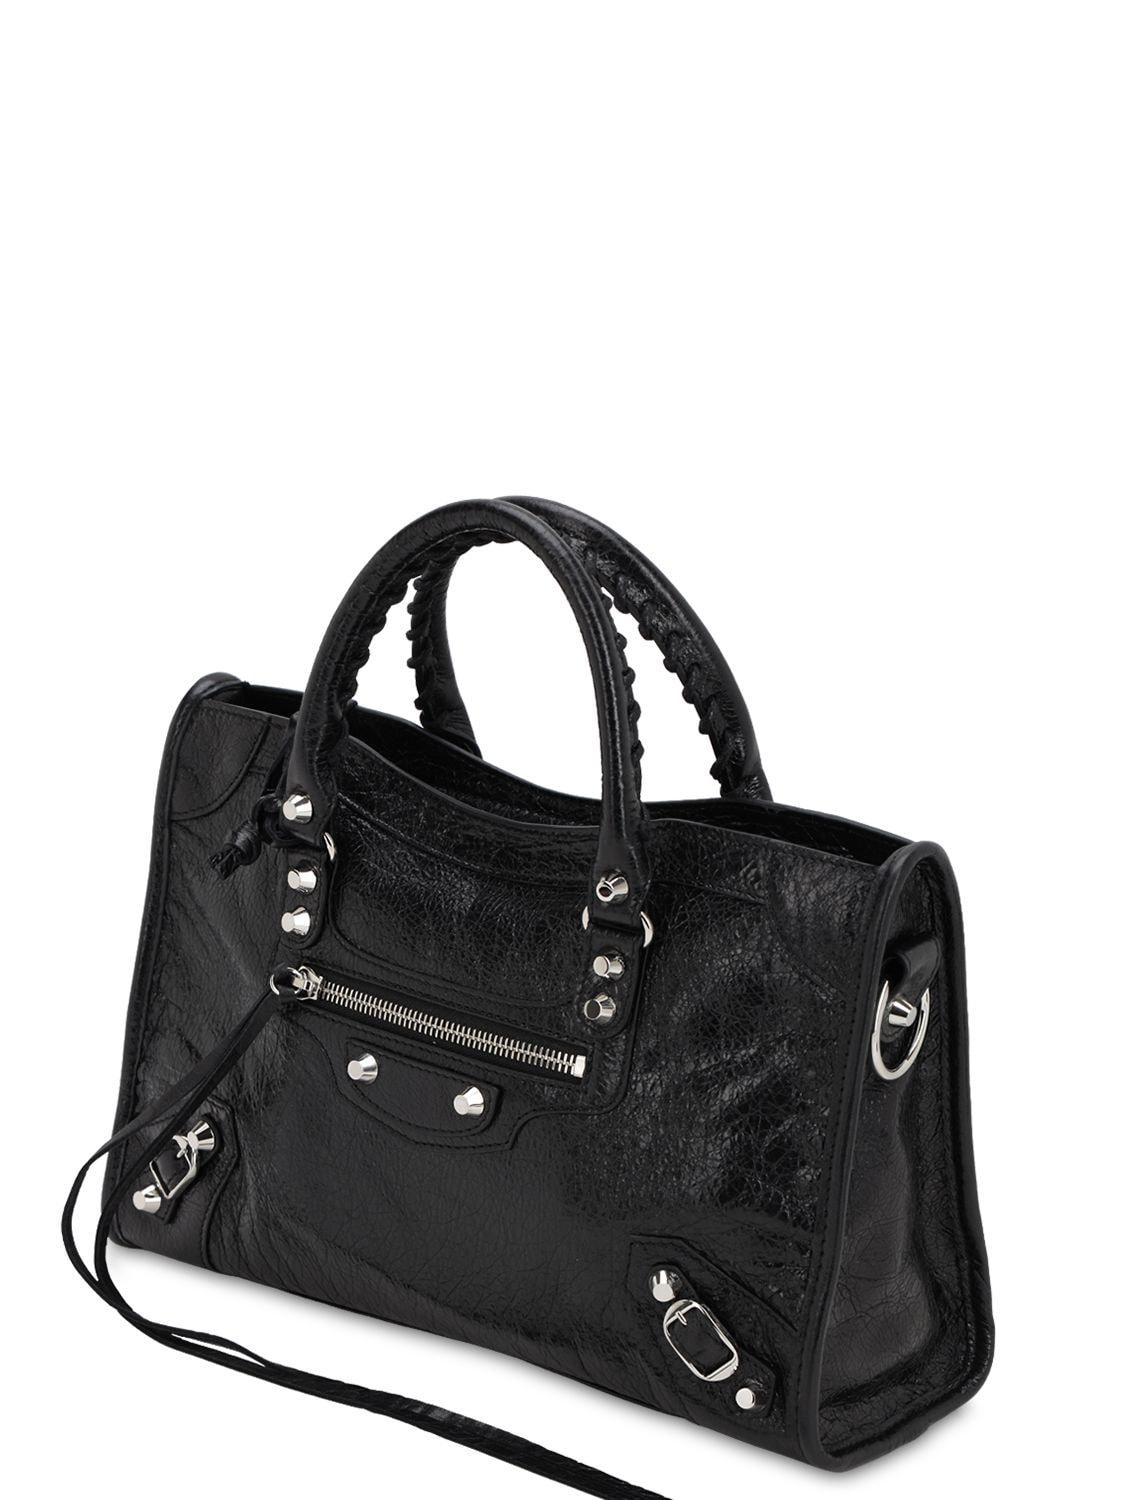 Balenciaga Sm Classic City Leather Bag in Black - Save 13% - Lyst